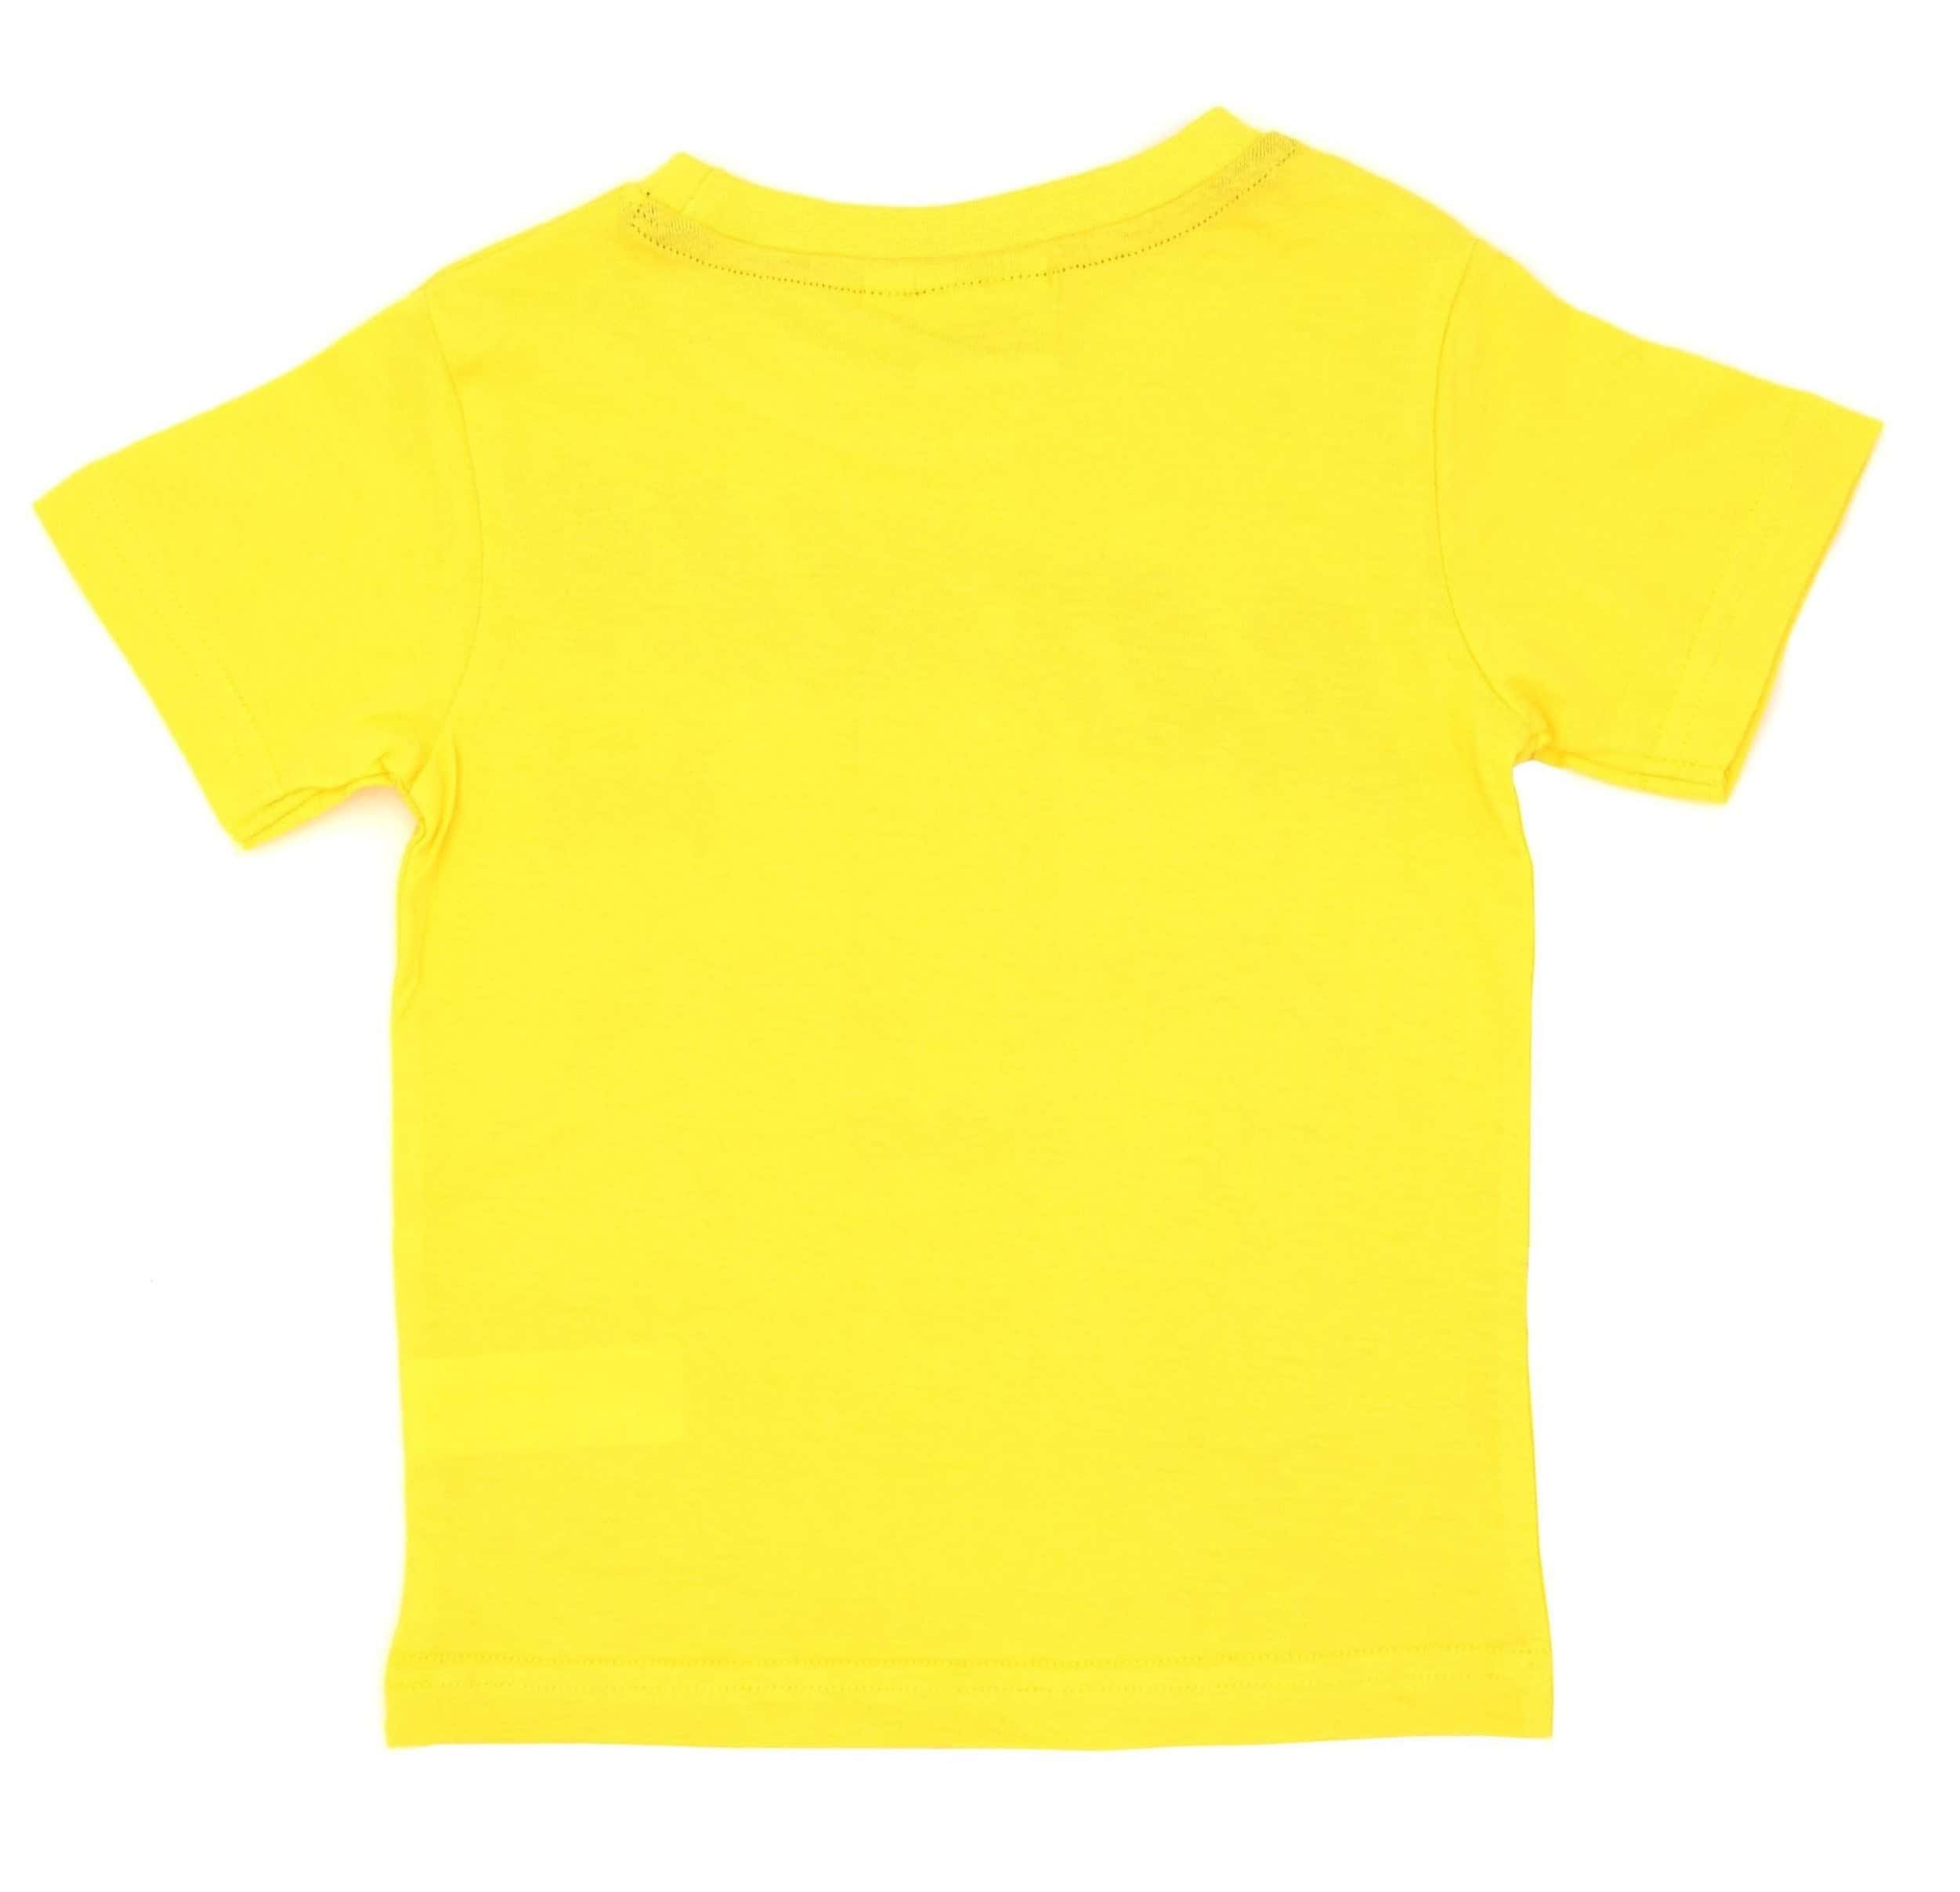 SpongeBob Nickelodeon®️ Character Boys T-shirt for Kids - Nickelodeon®️ High quality Graphic printed T-Shirt - Dealz Souq